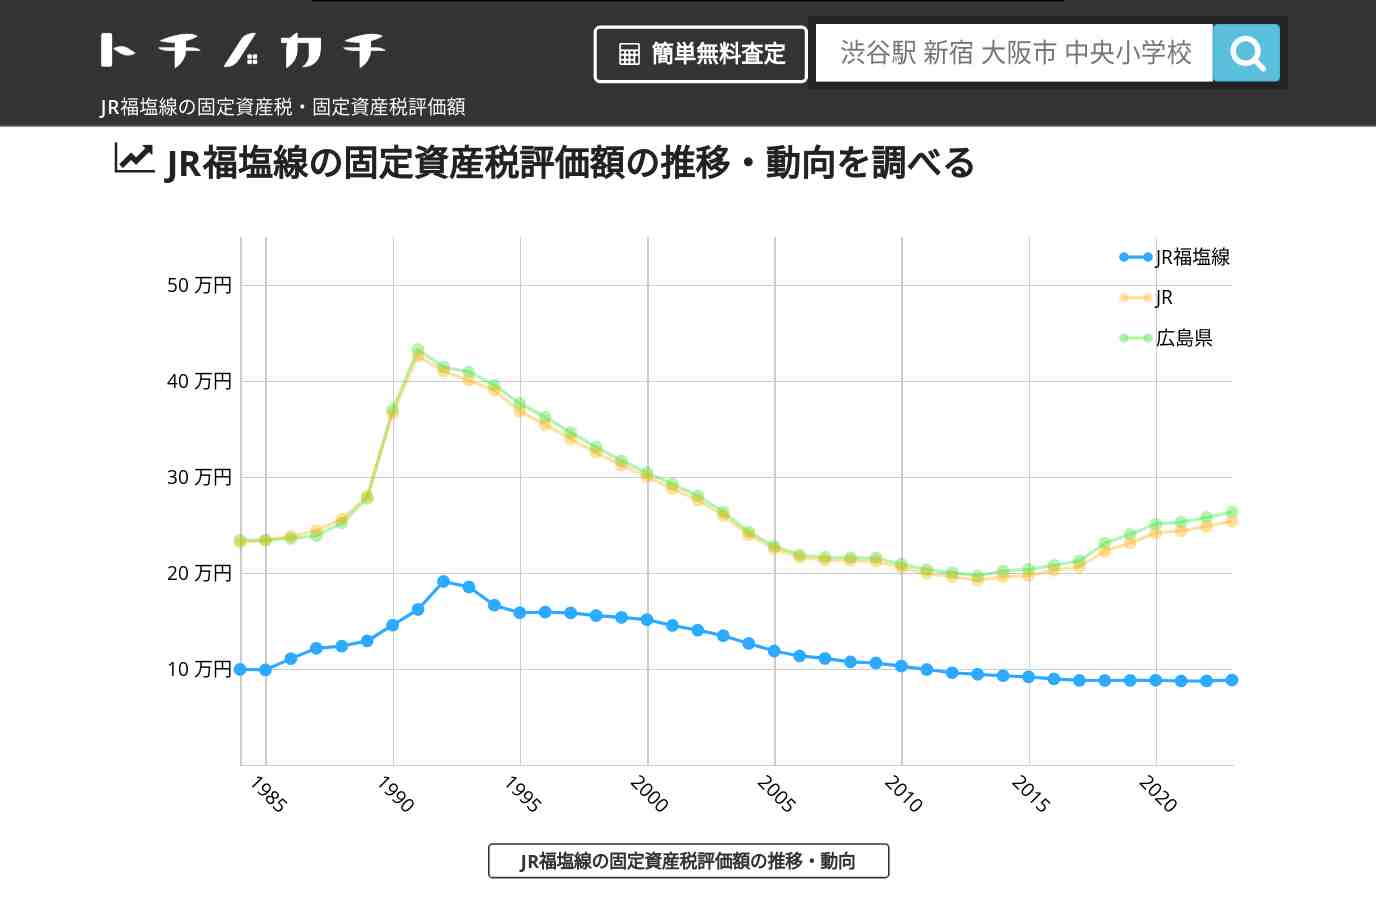 JR福塩線(JR)の固定資産税・固定資産税評価額 | トチノカチ